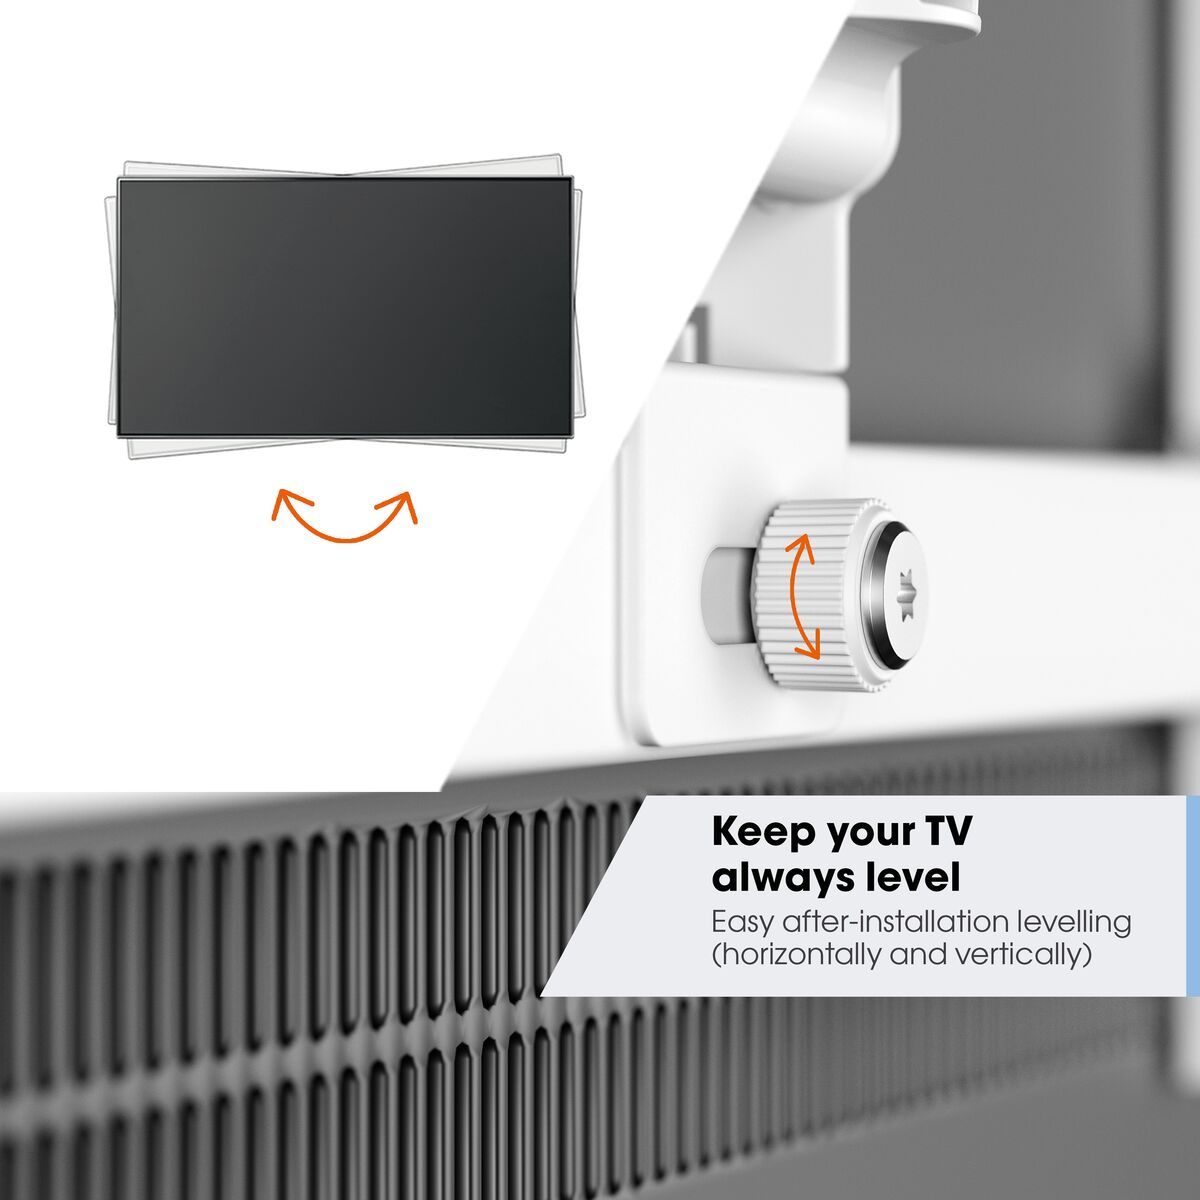 Vogel's TVM 3645 Full-Motion TV Wall Mount (white) - Suitable for 40 up to 77 inch TVs - Full motion (up to 180°) swivel - Tilt up to 20° - USP